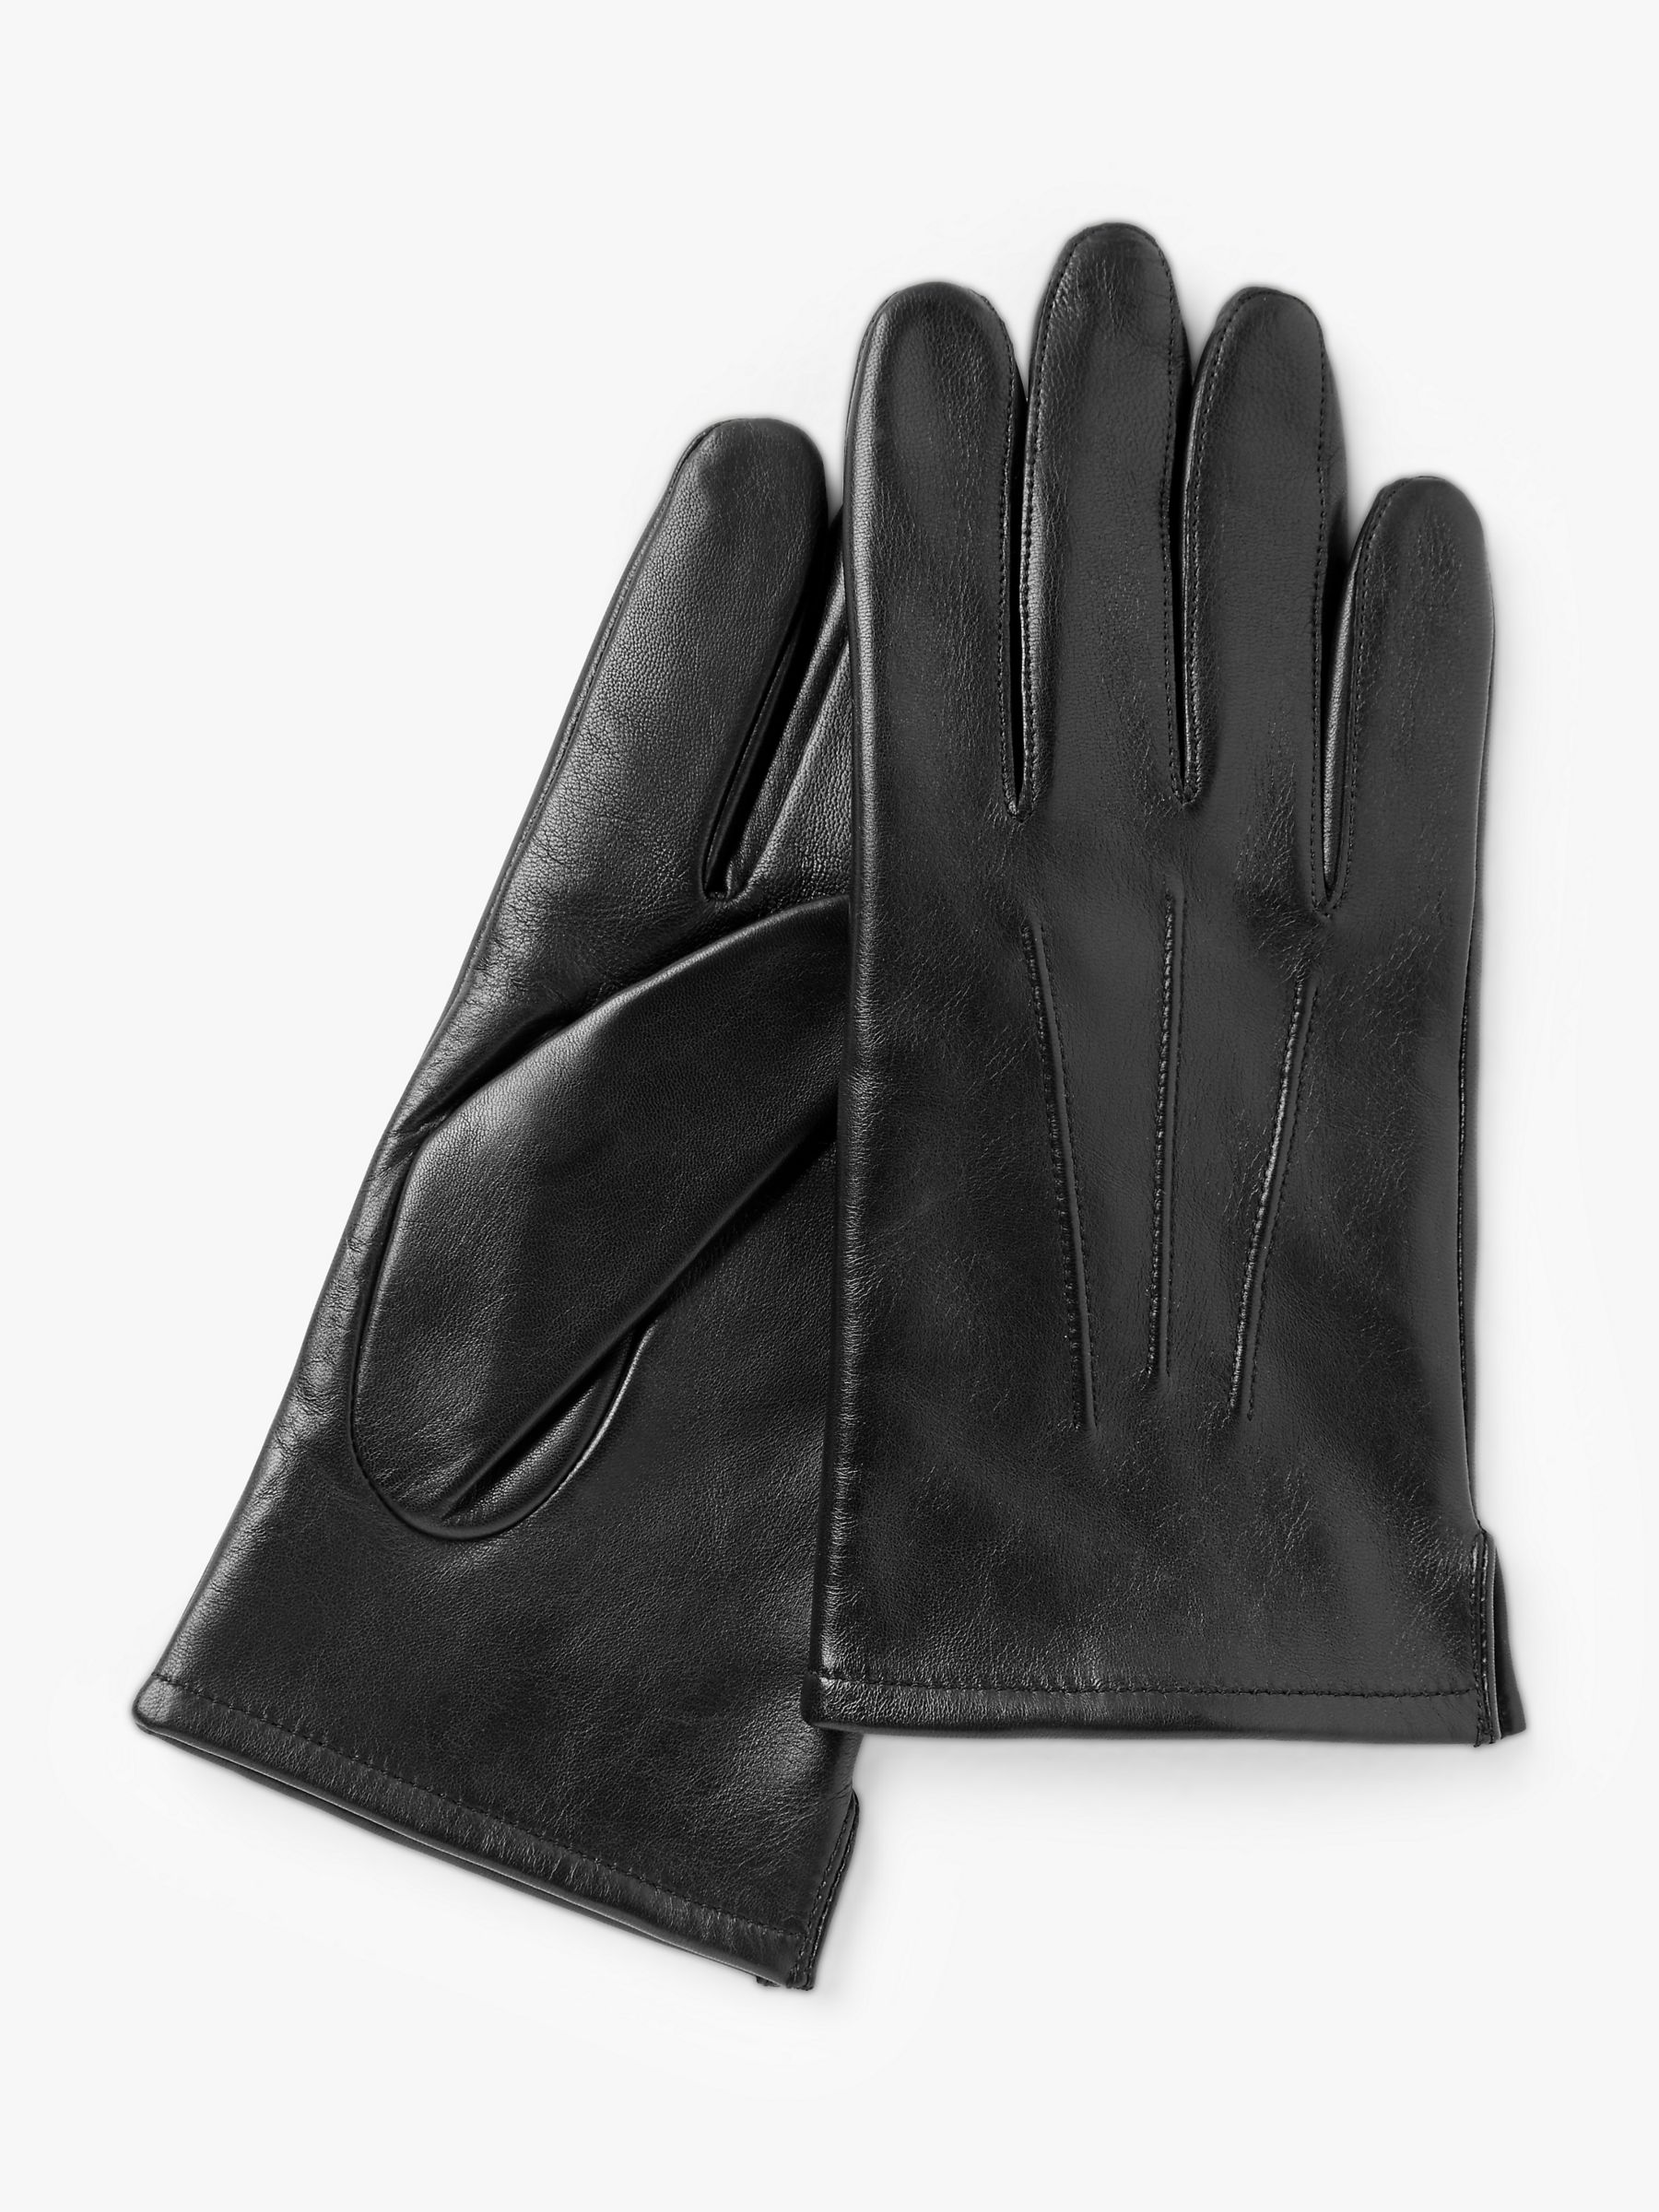 John Lewis Fleece Leather Gloves, Black at John Lewis & Partners